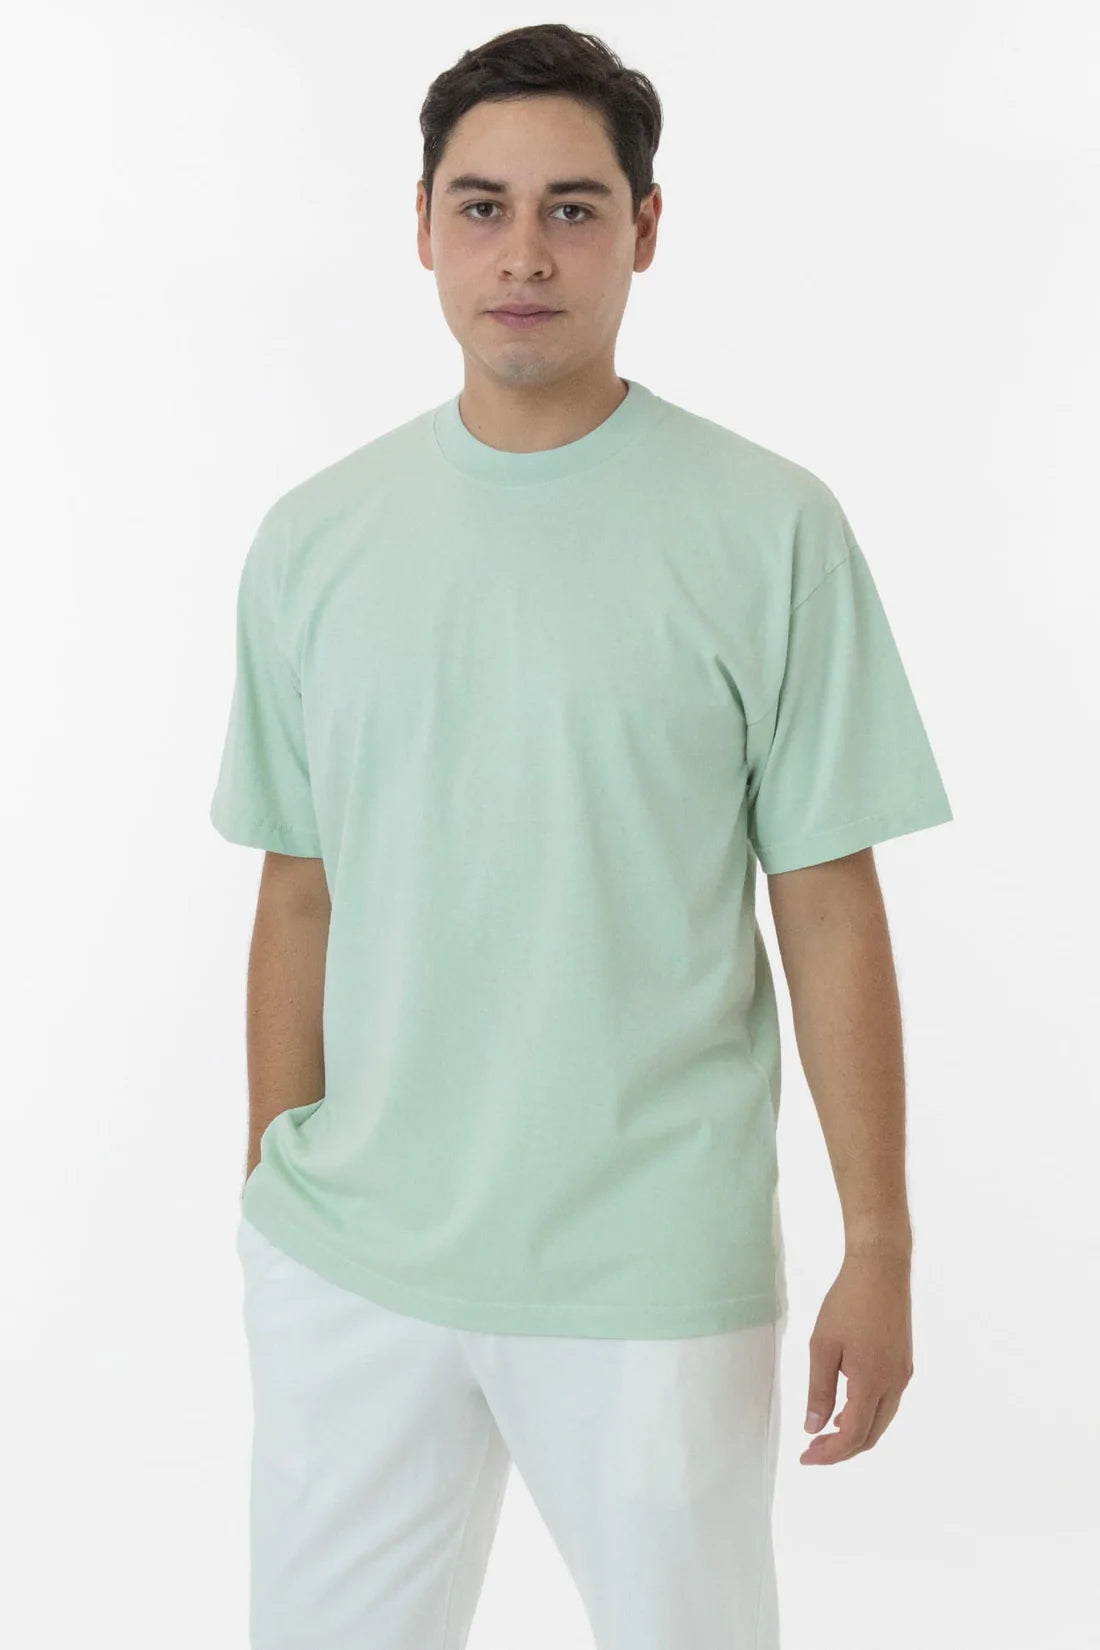 US Size Large Blank Custom T-shirt Heat Transfer Heat Short Sleeve at   Men's Clothing store